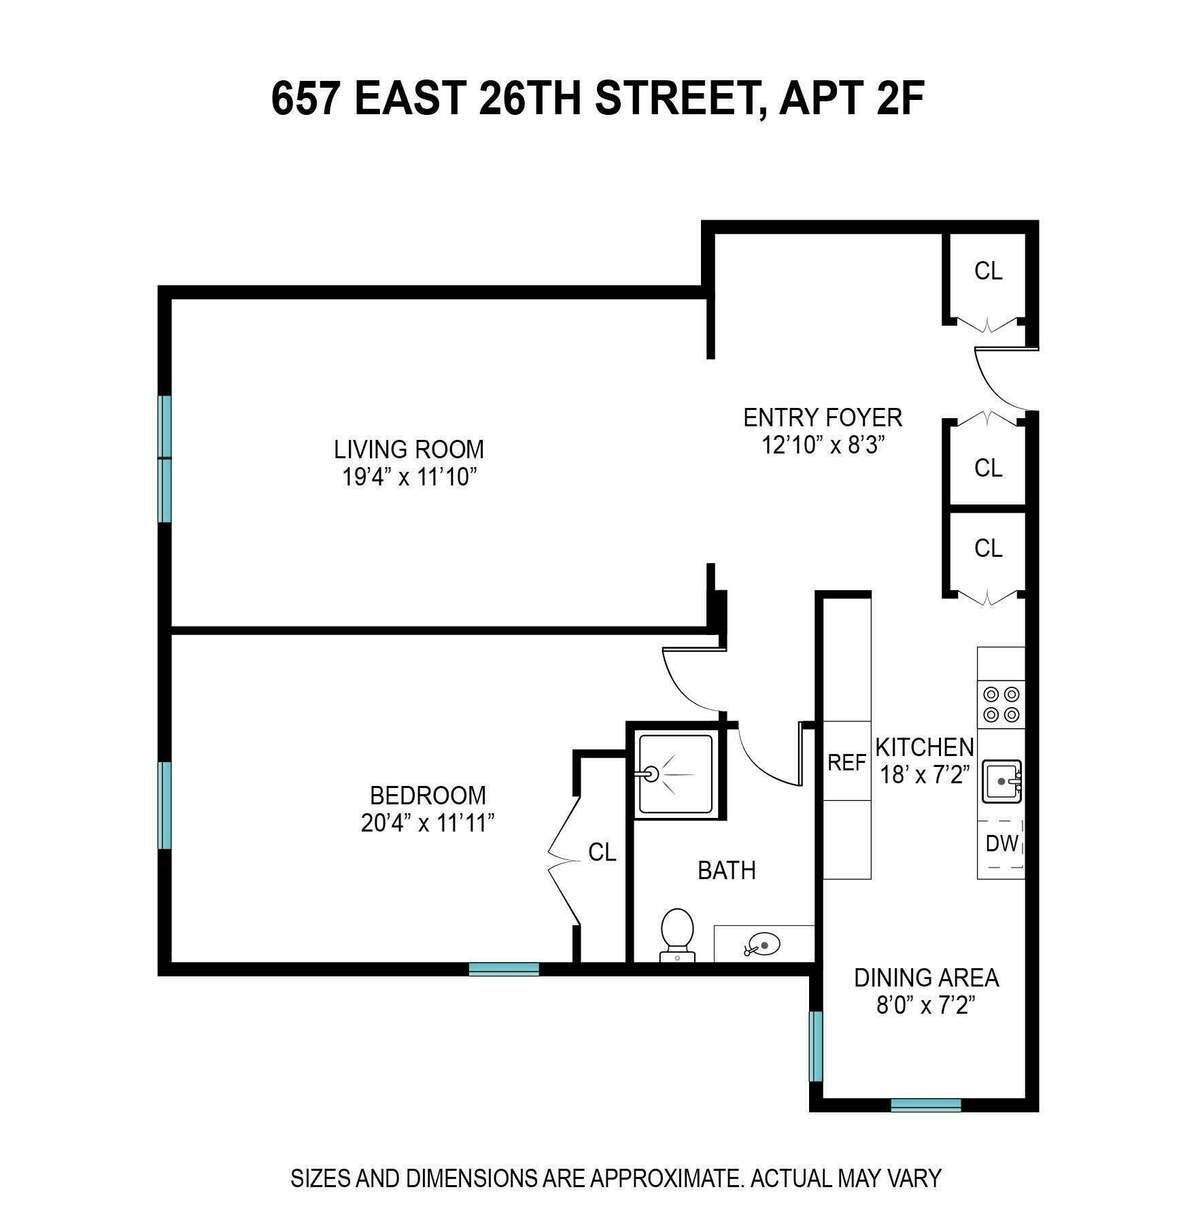 floorplan of unit 2f at 657 east 26th street